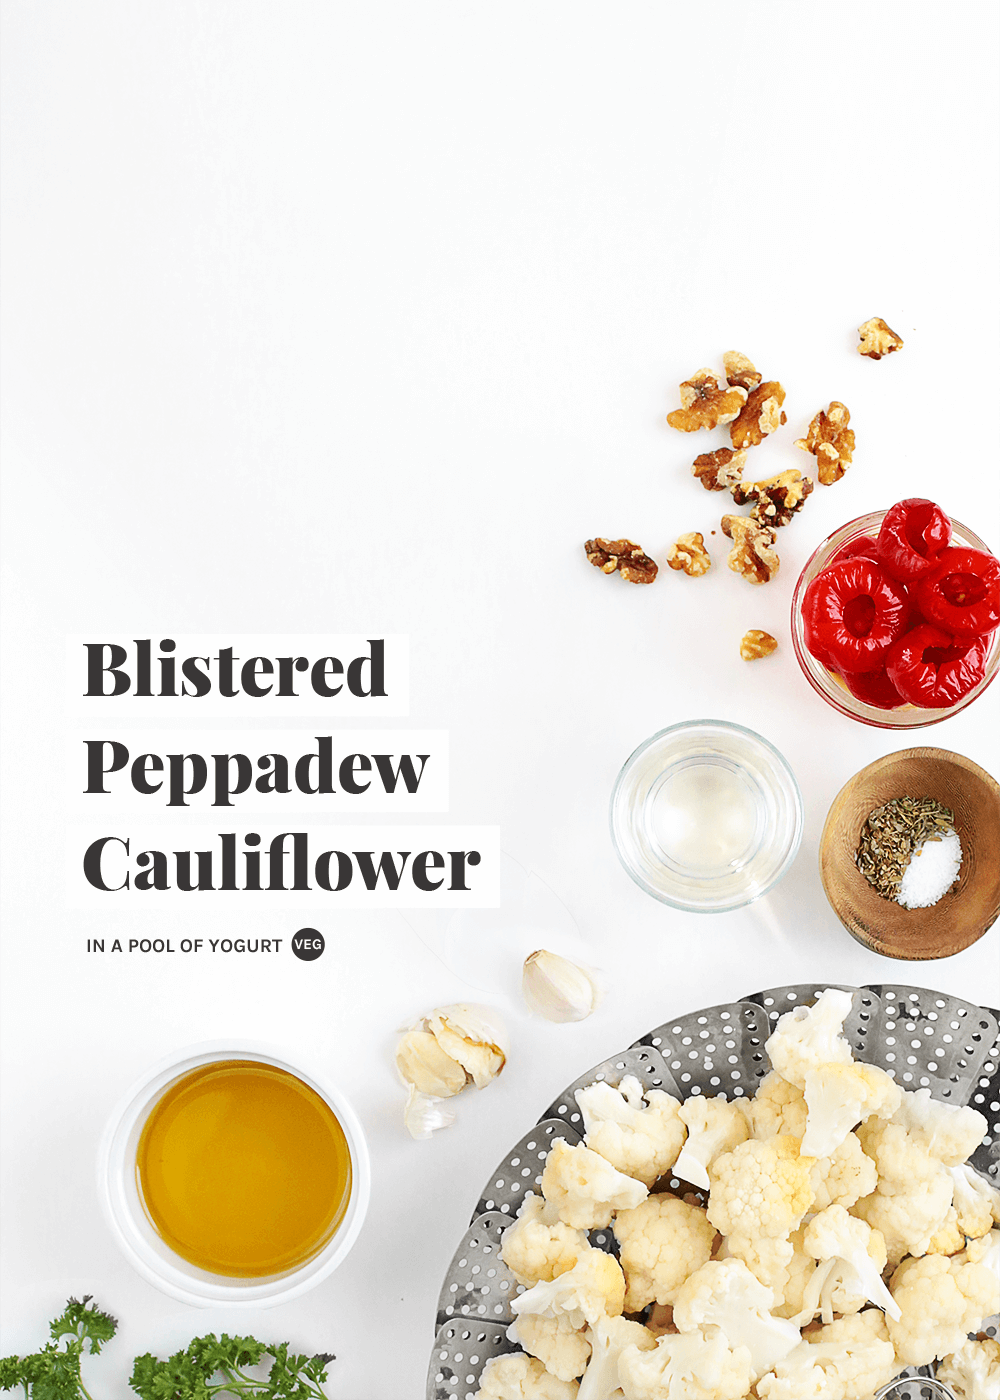 Blistered Peppadew Cauliflower appetizer recipe from The Fauxmartha